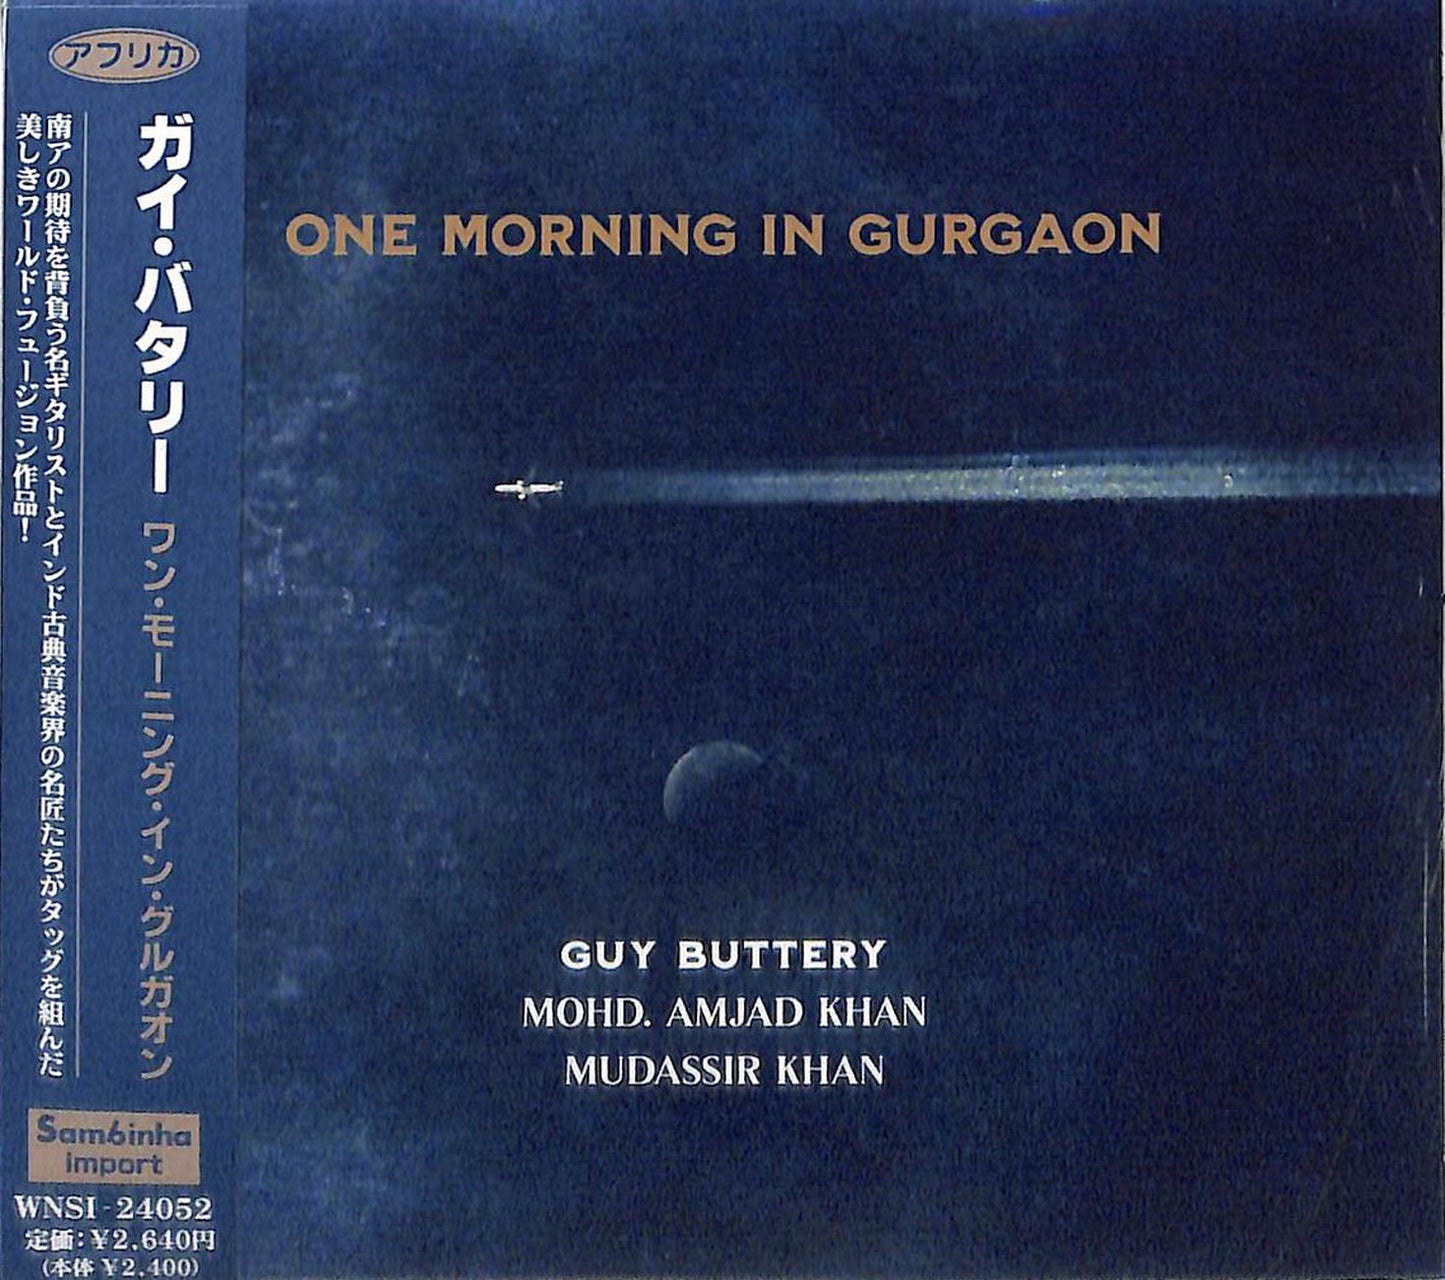 Guy Buttery & Mohd. Amjad Khan & Mudassir Khan - One Morning In Gurgaon - Import CD